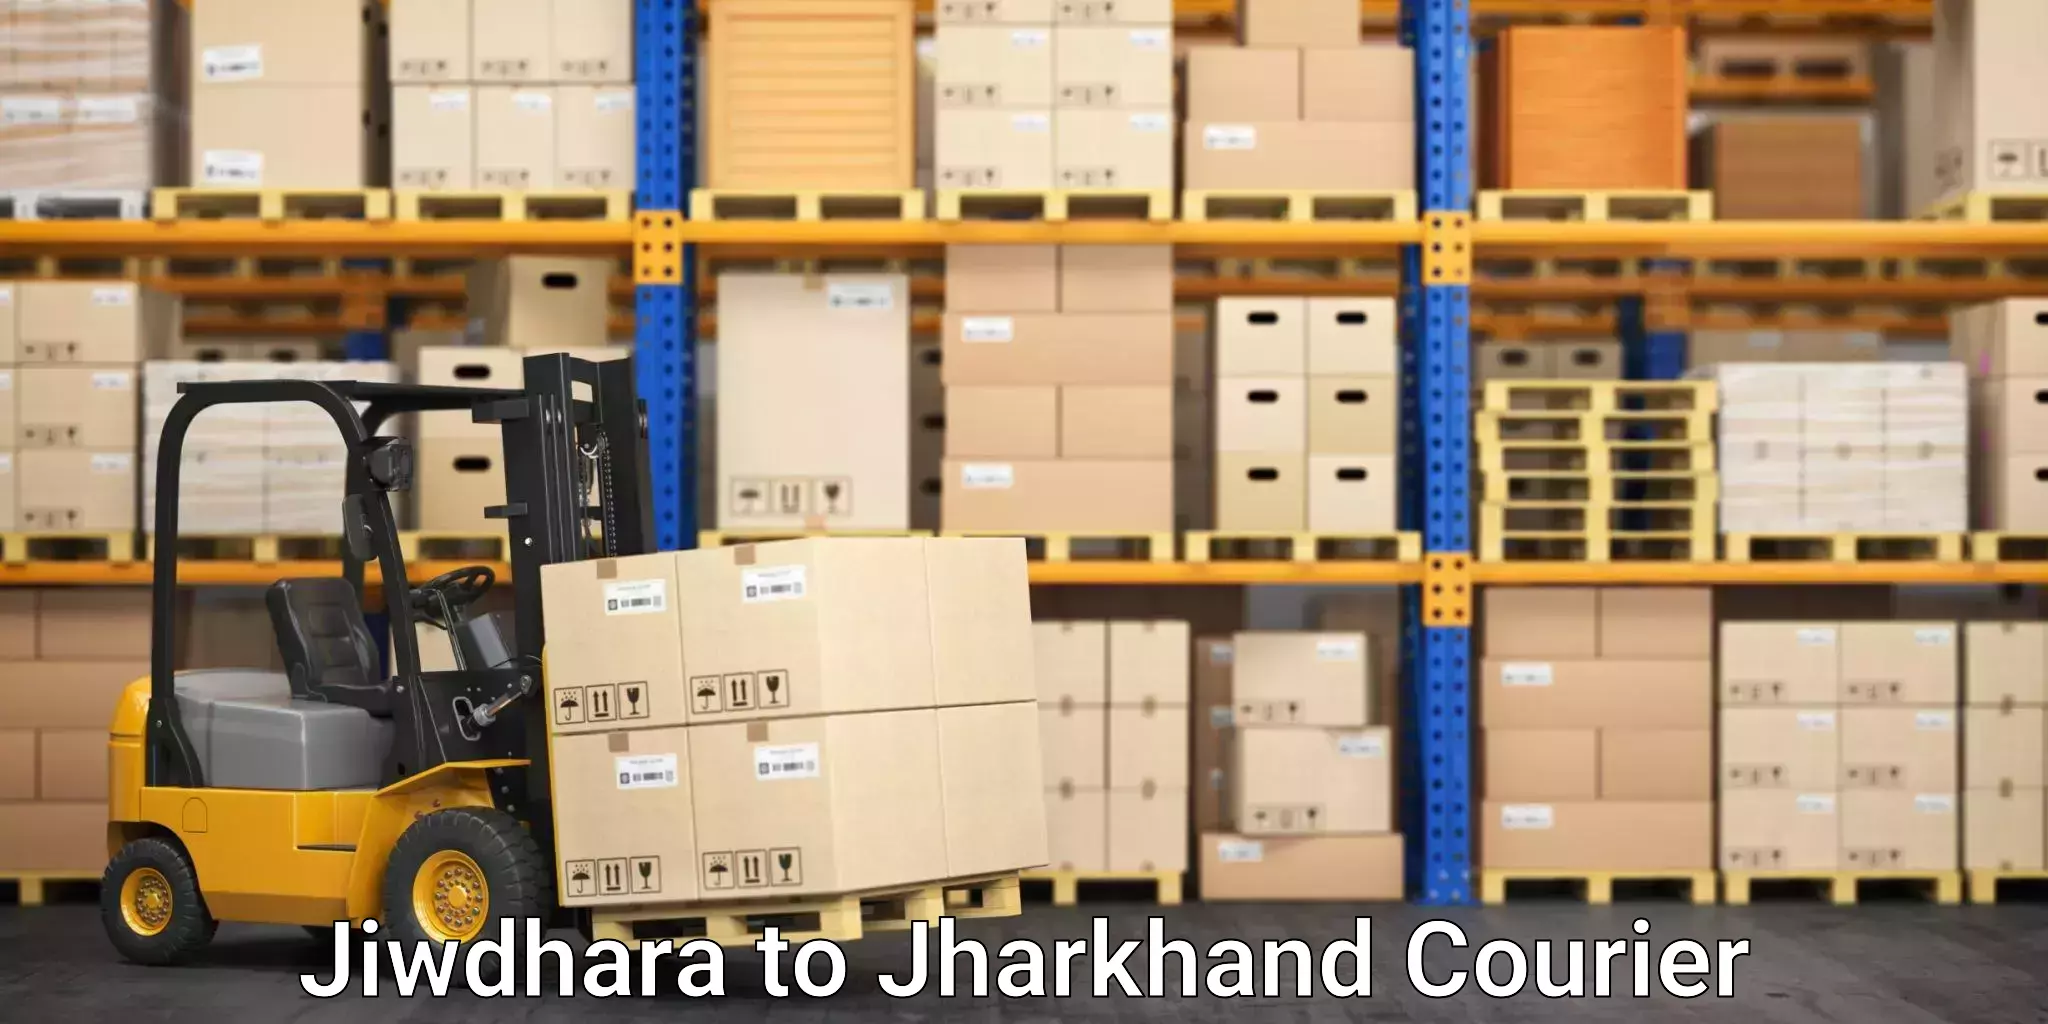 Furniture logistics in Jiwdhara to Jharkhand